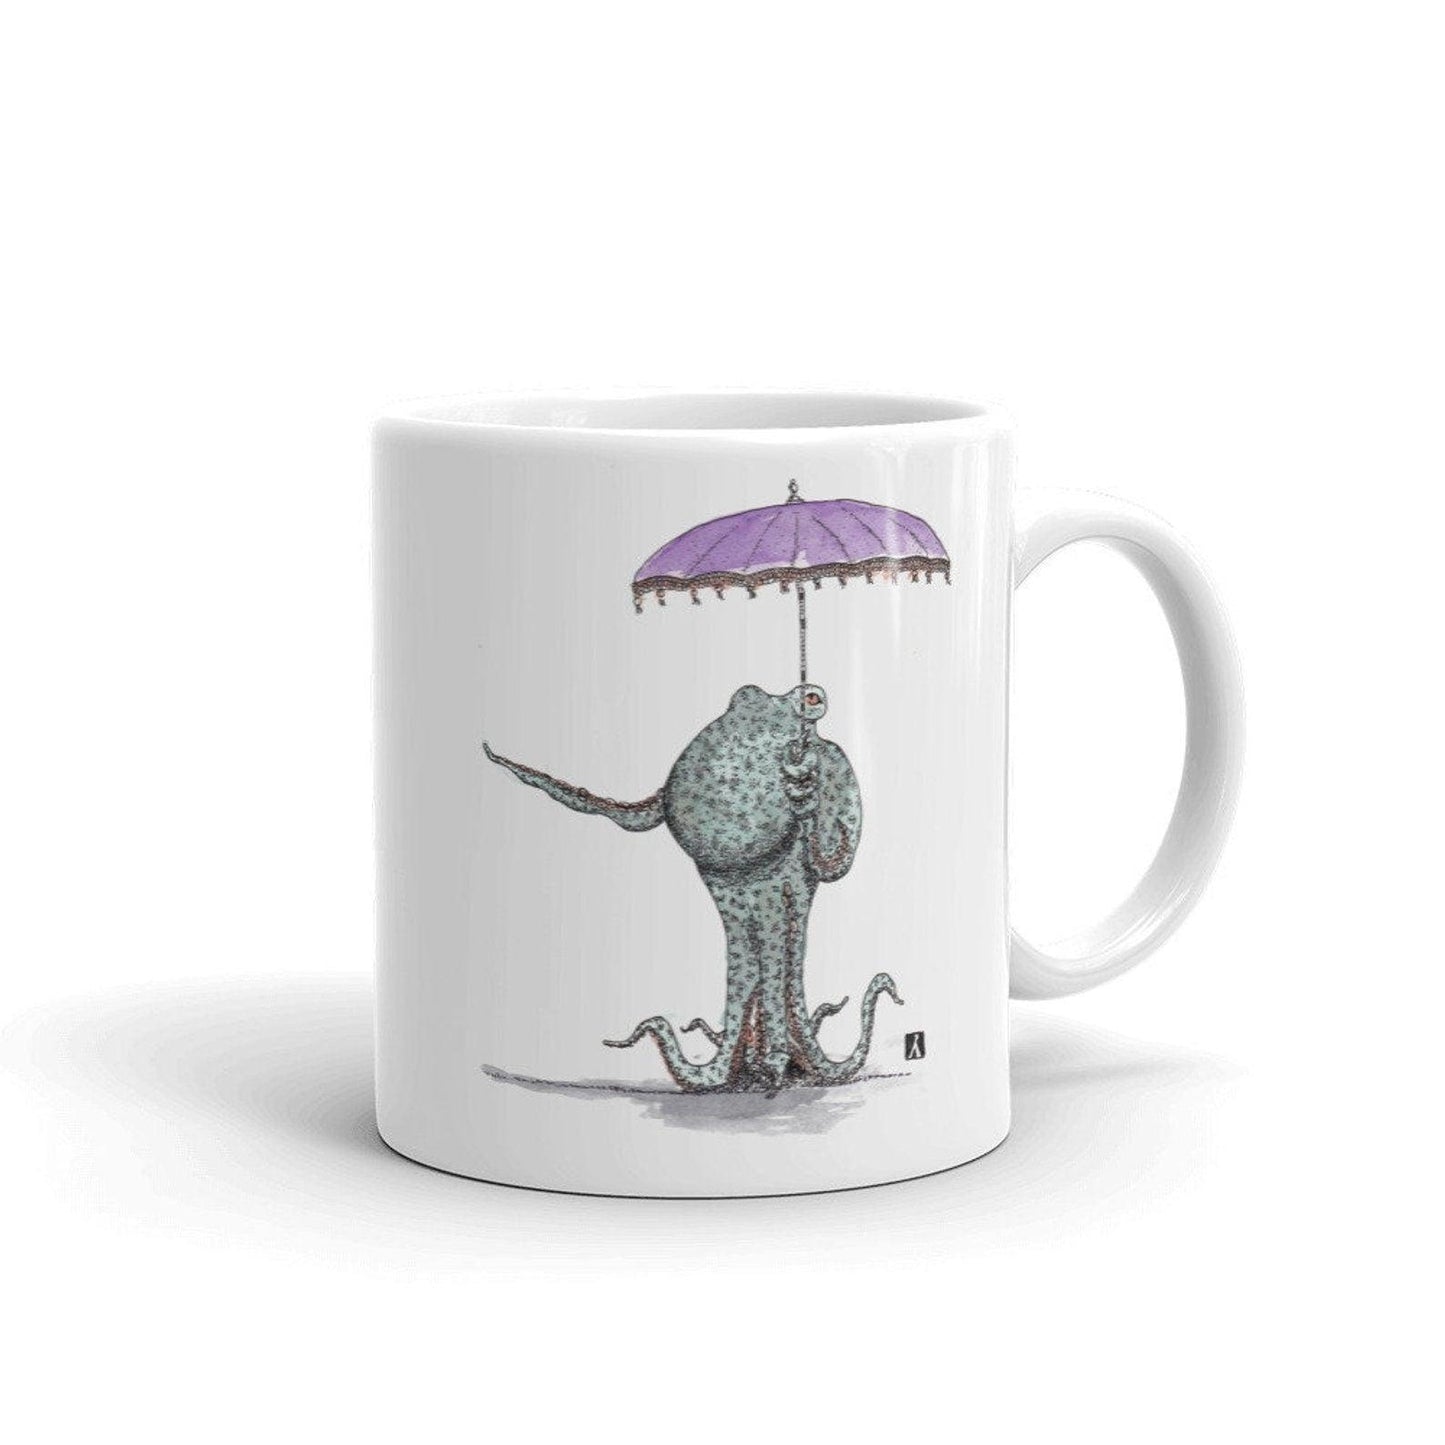 BellavanceInk: Coffee Mug With Octopus Holding an Umbrella/Parasol Pen & Ink Sketch - BellavanceInk